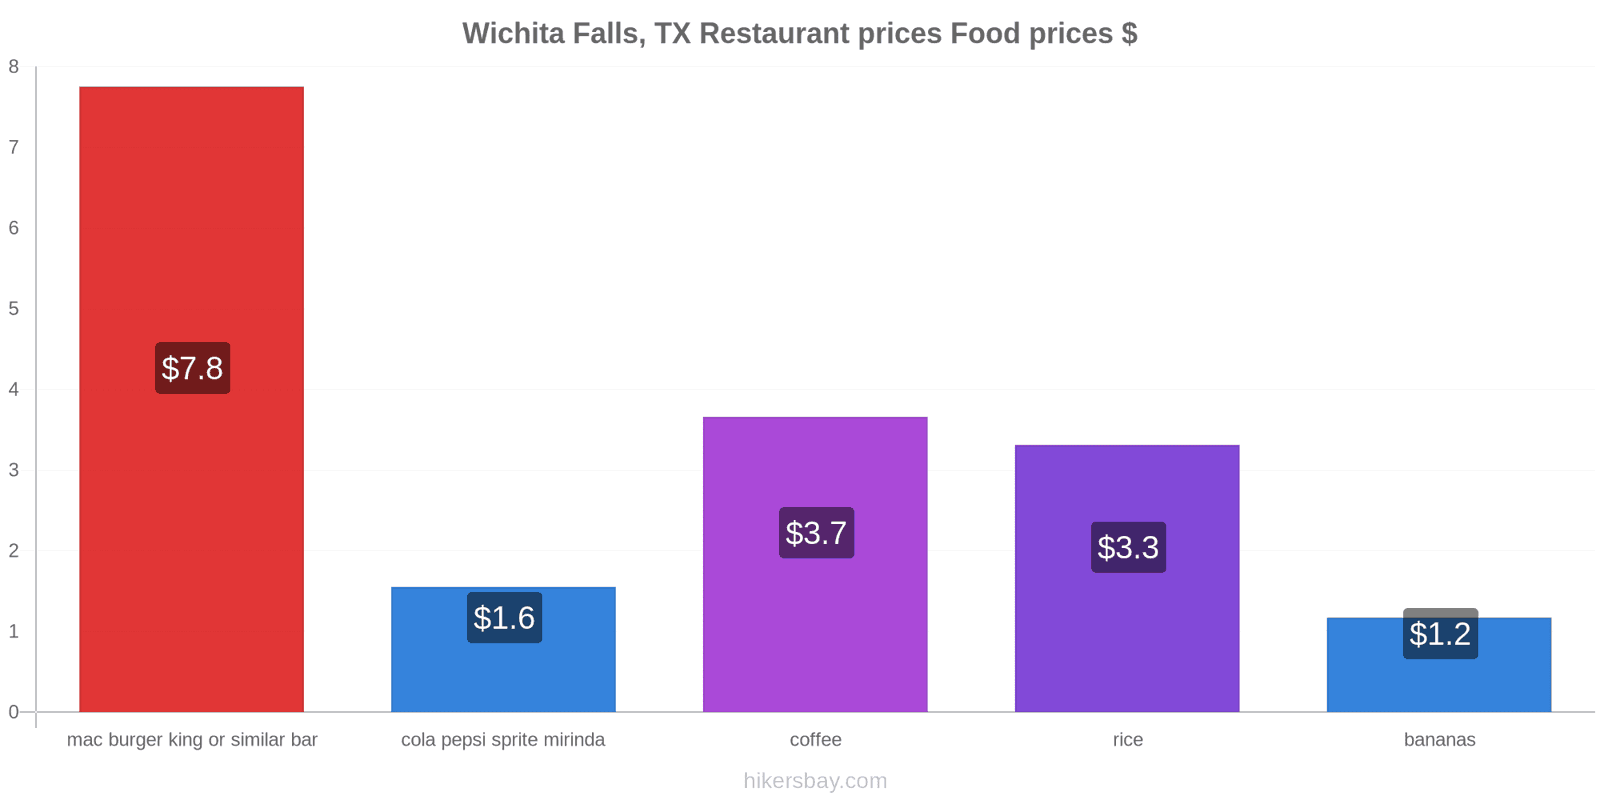 Wichita Falls, TX price changes hikersbay.com